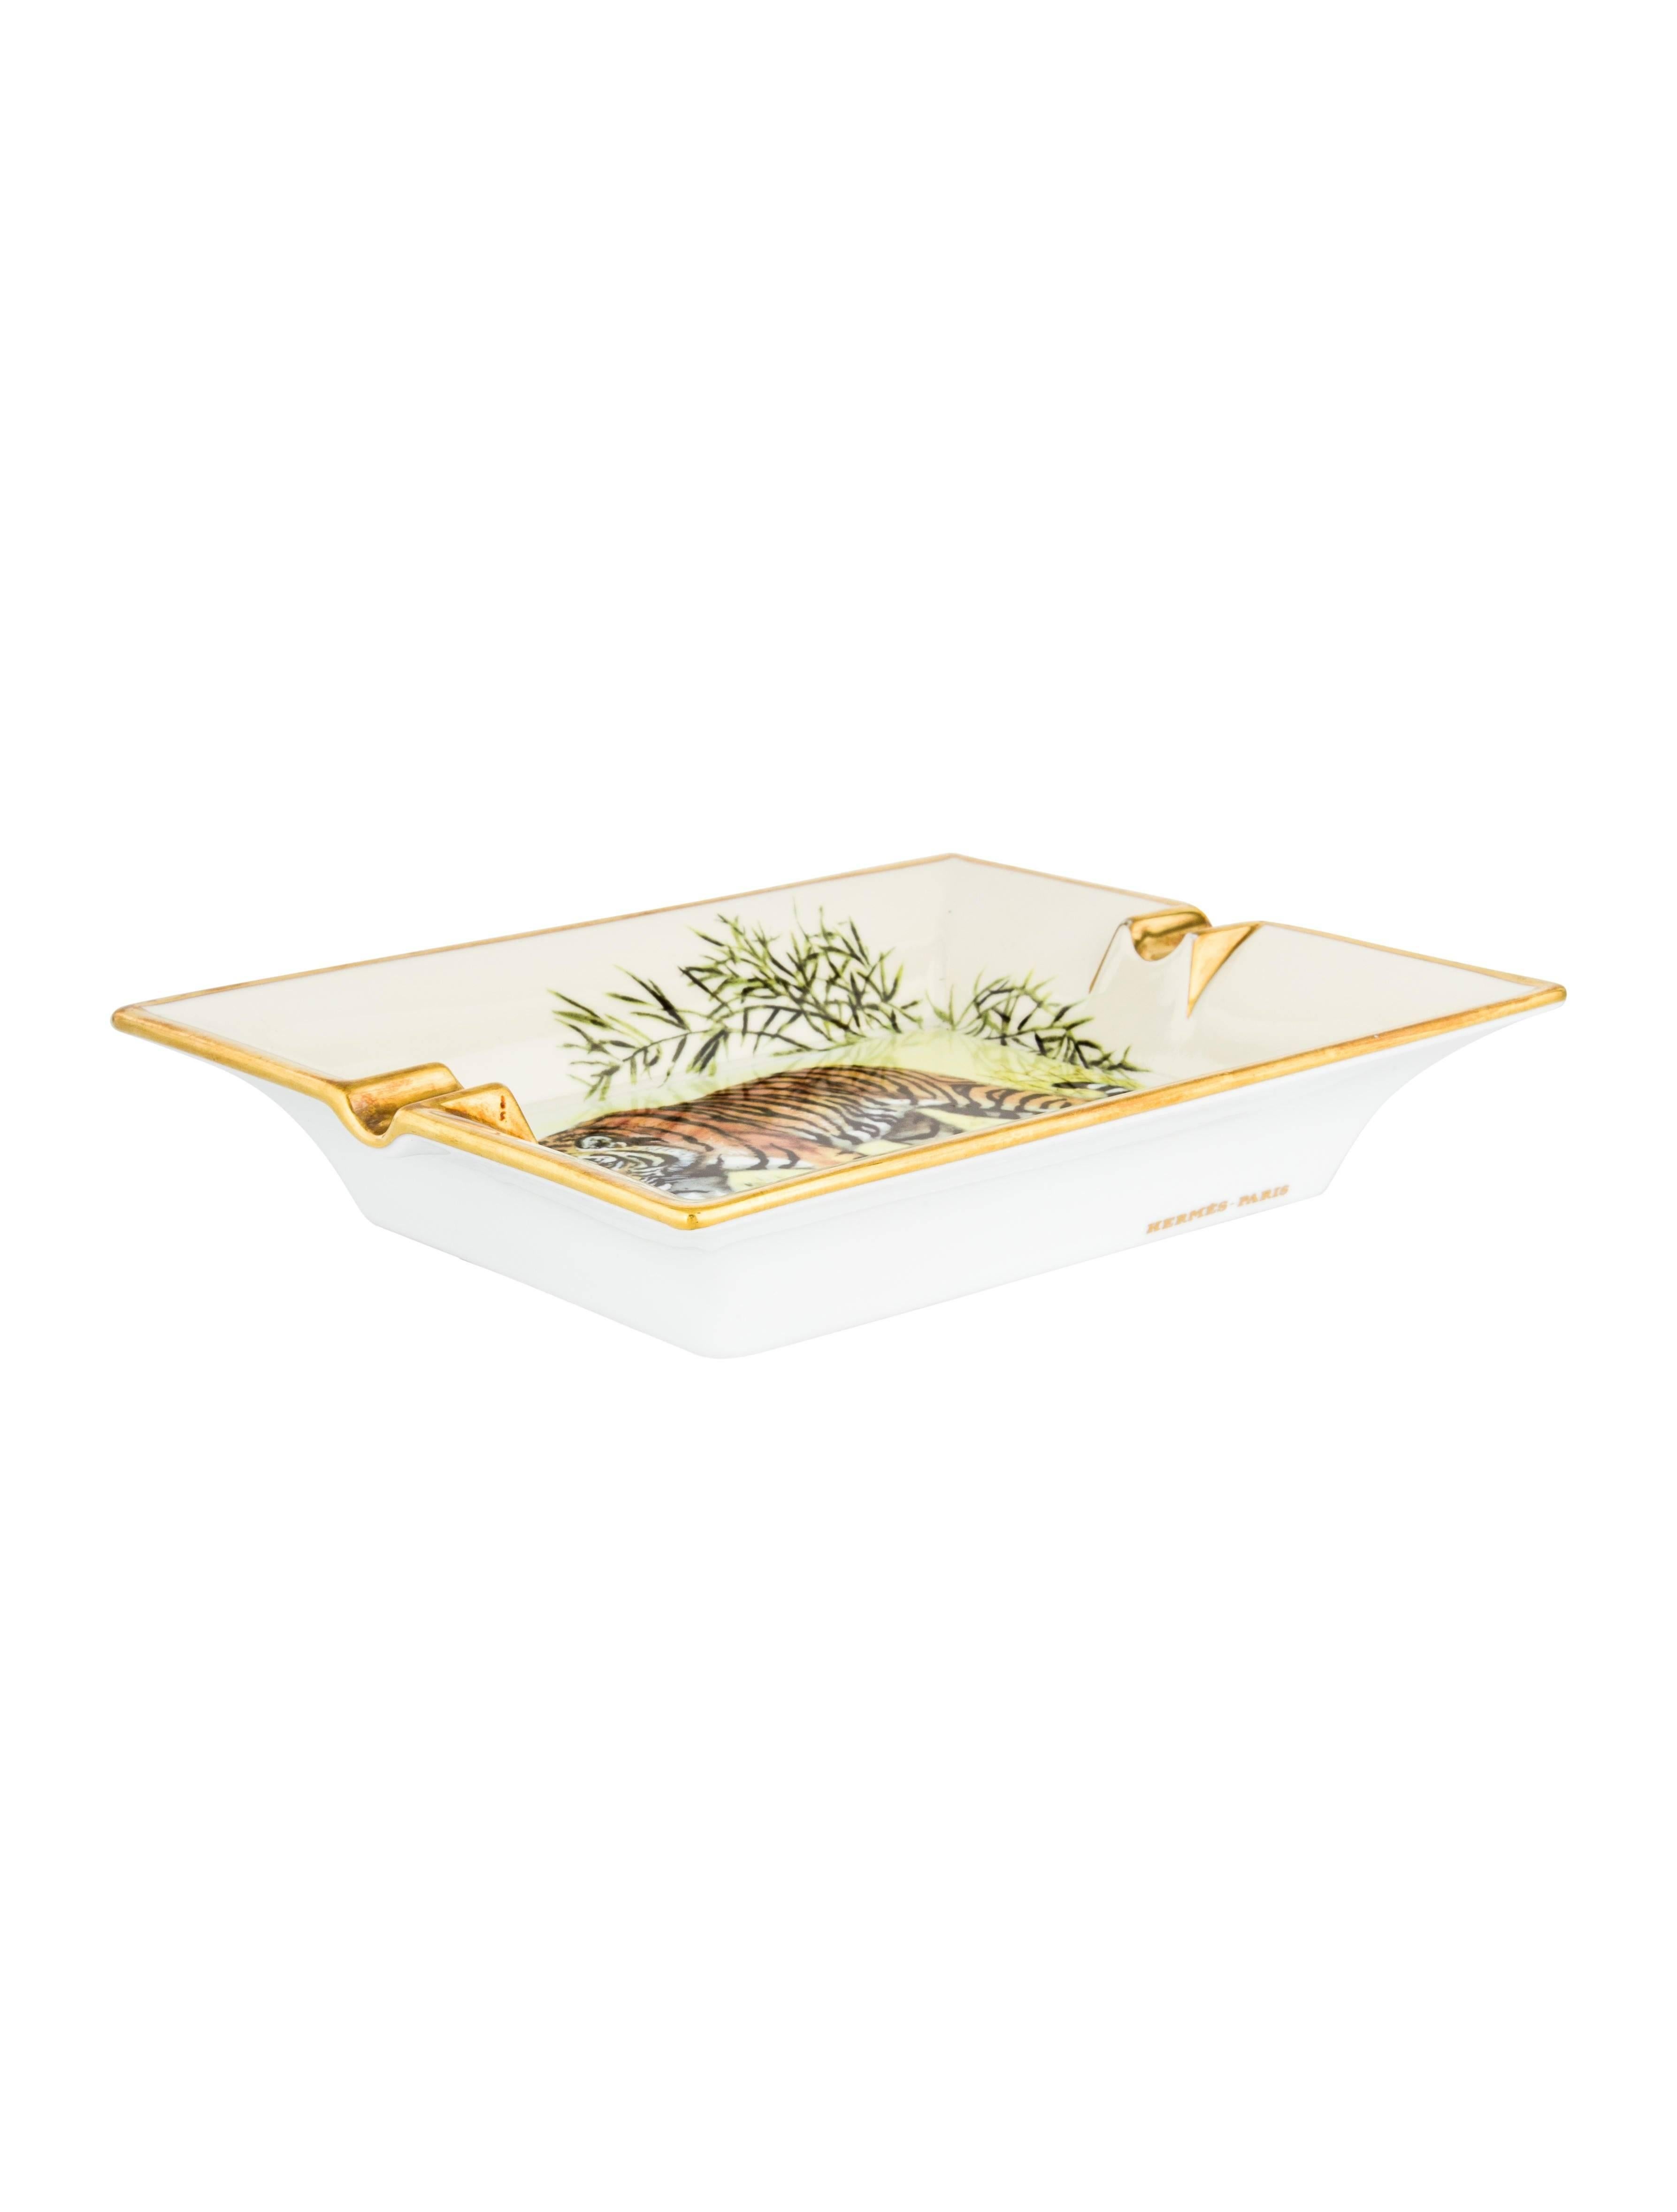 CURTOR'S NOTES

Hermes White Porcelain Gilt Gold Desk Table Decorative Ashtray Tray Trinket Dish  

Porcelain
Gold gilt accent
Suede 
Signed Hermes Paris
Measures 7.75" W x 1.5" H x 6.25" D  